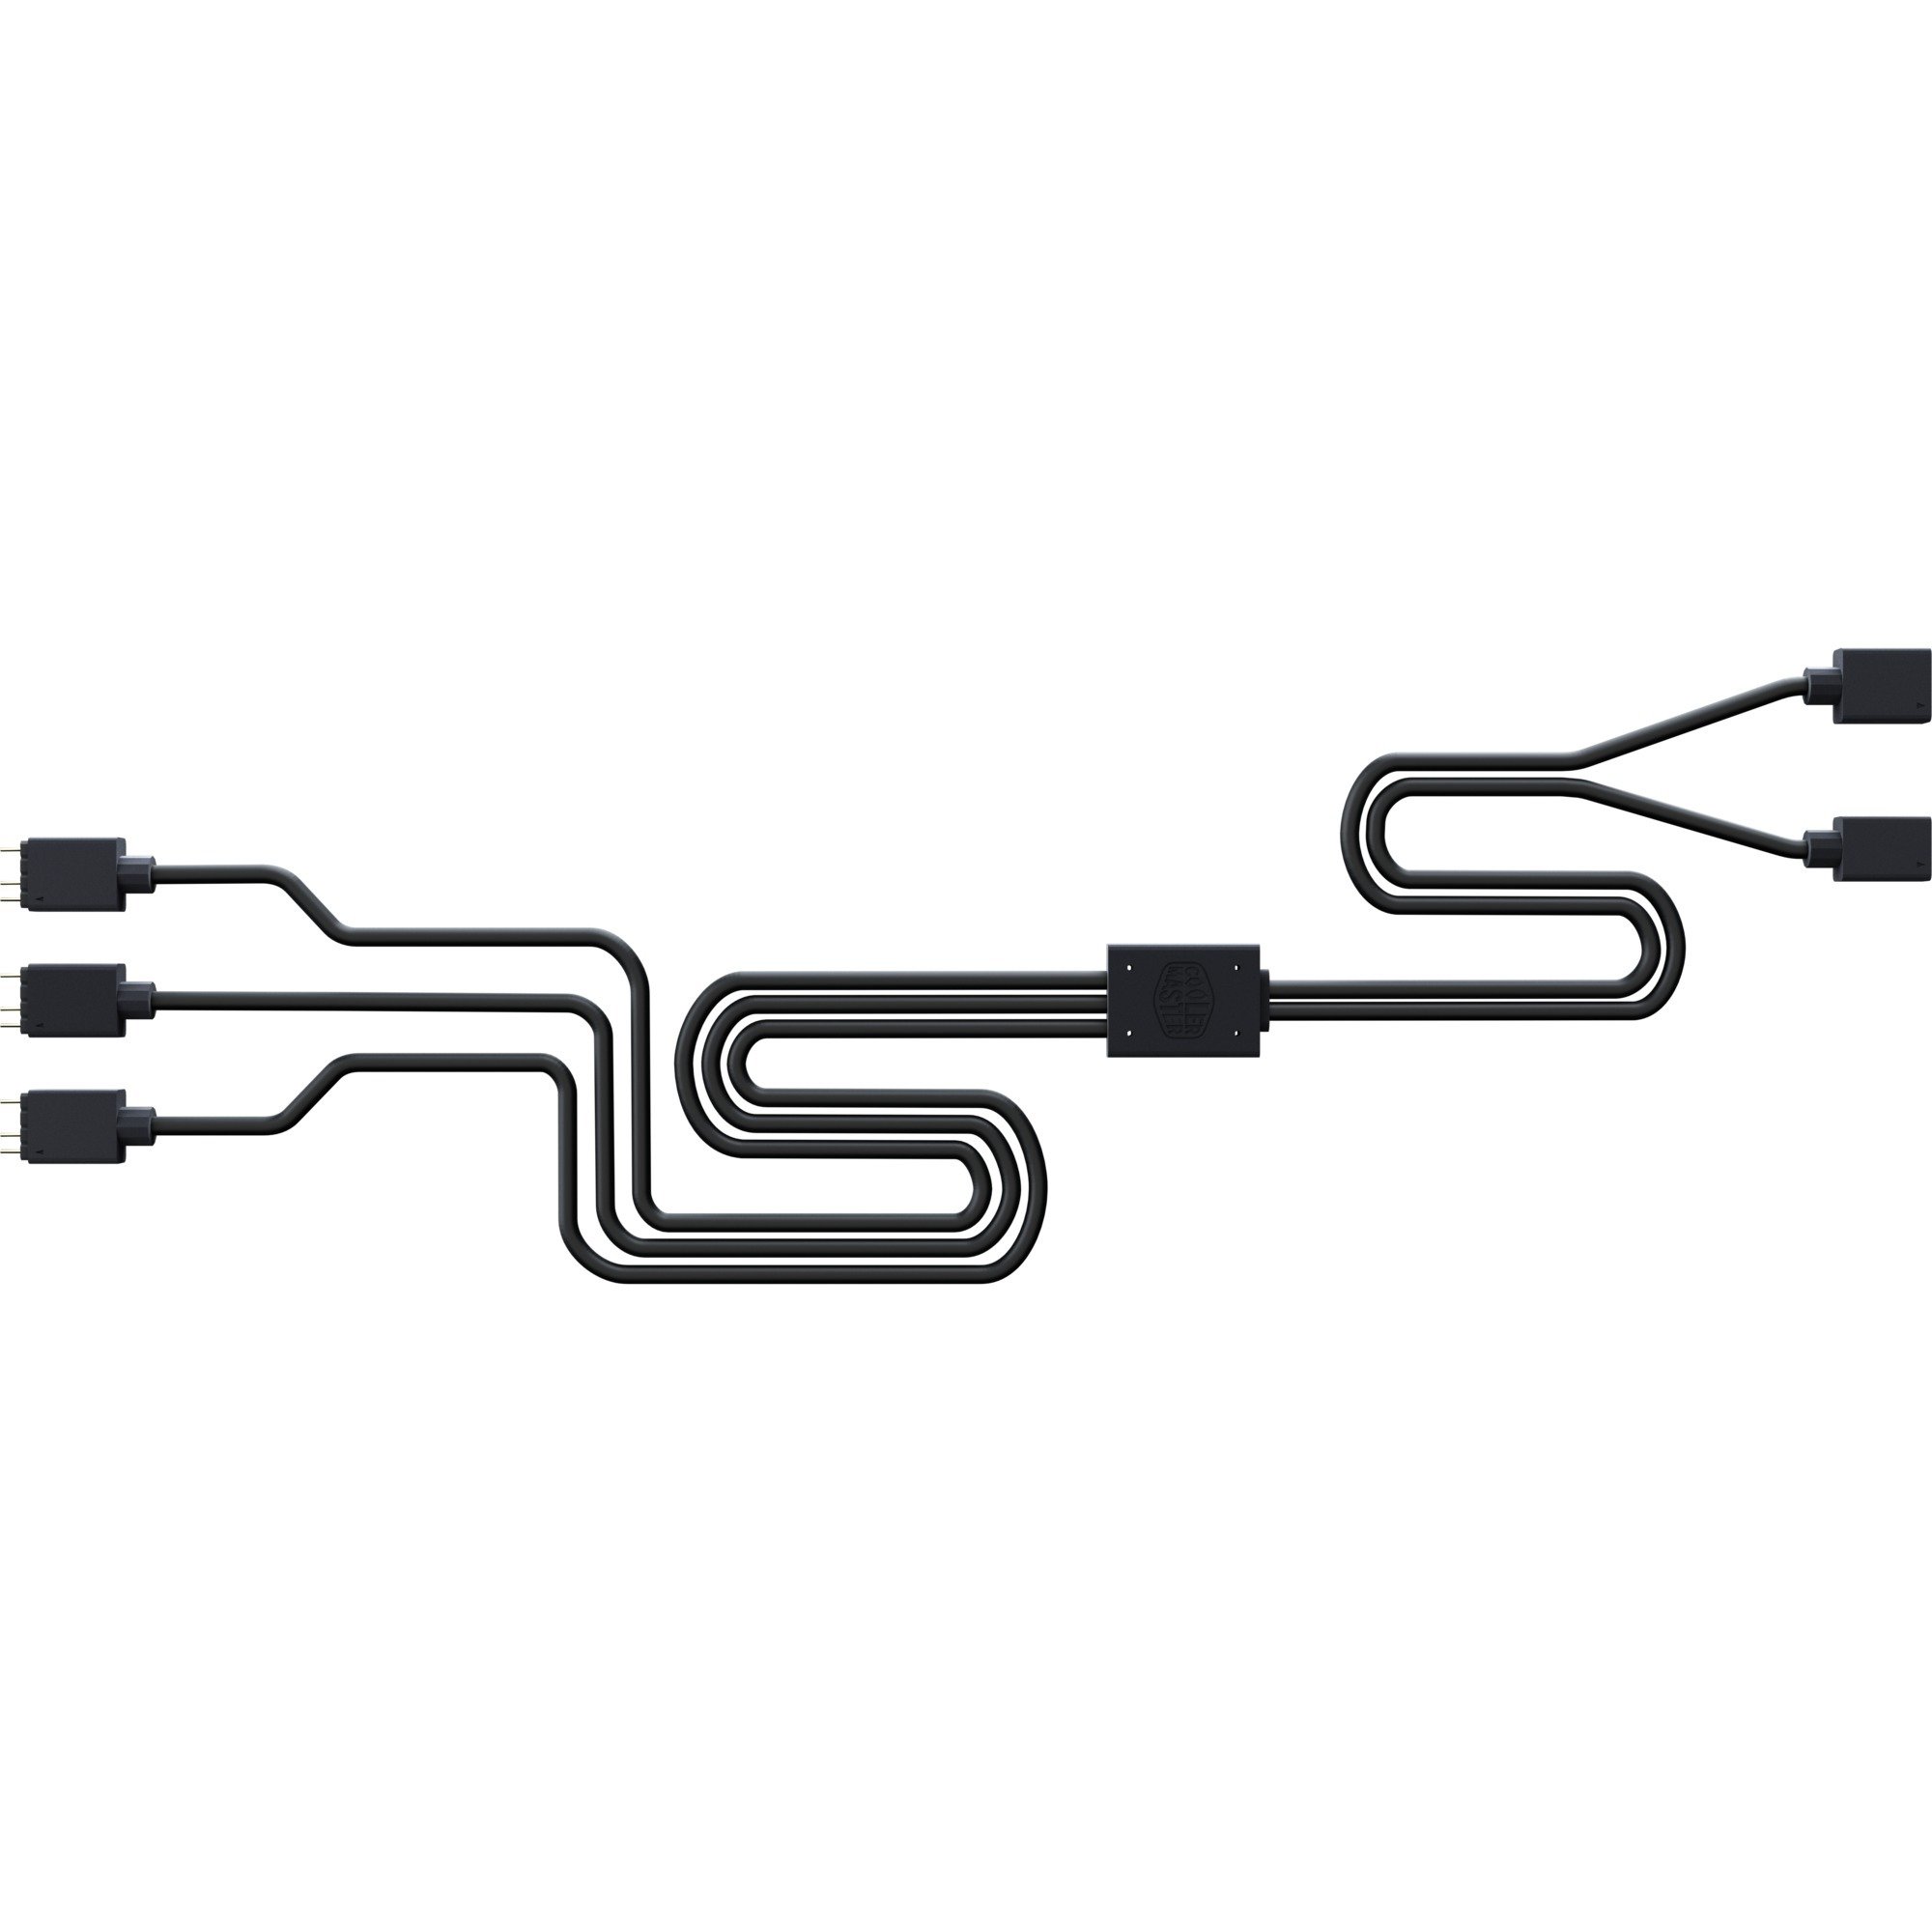 1 to 3 ARGB splitter cable, Kabel